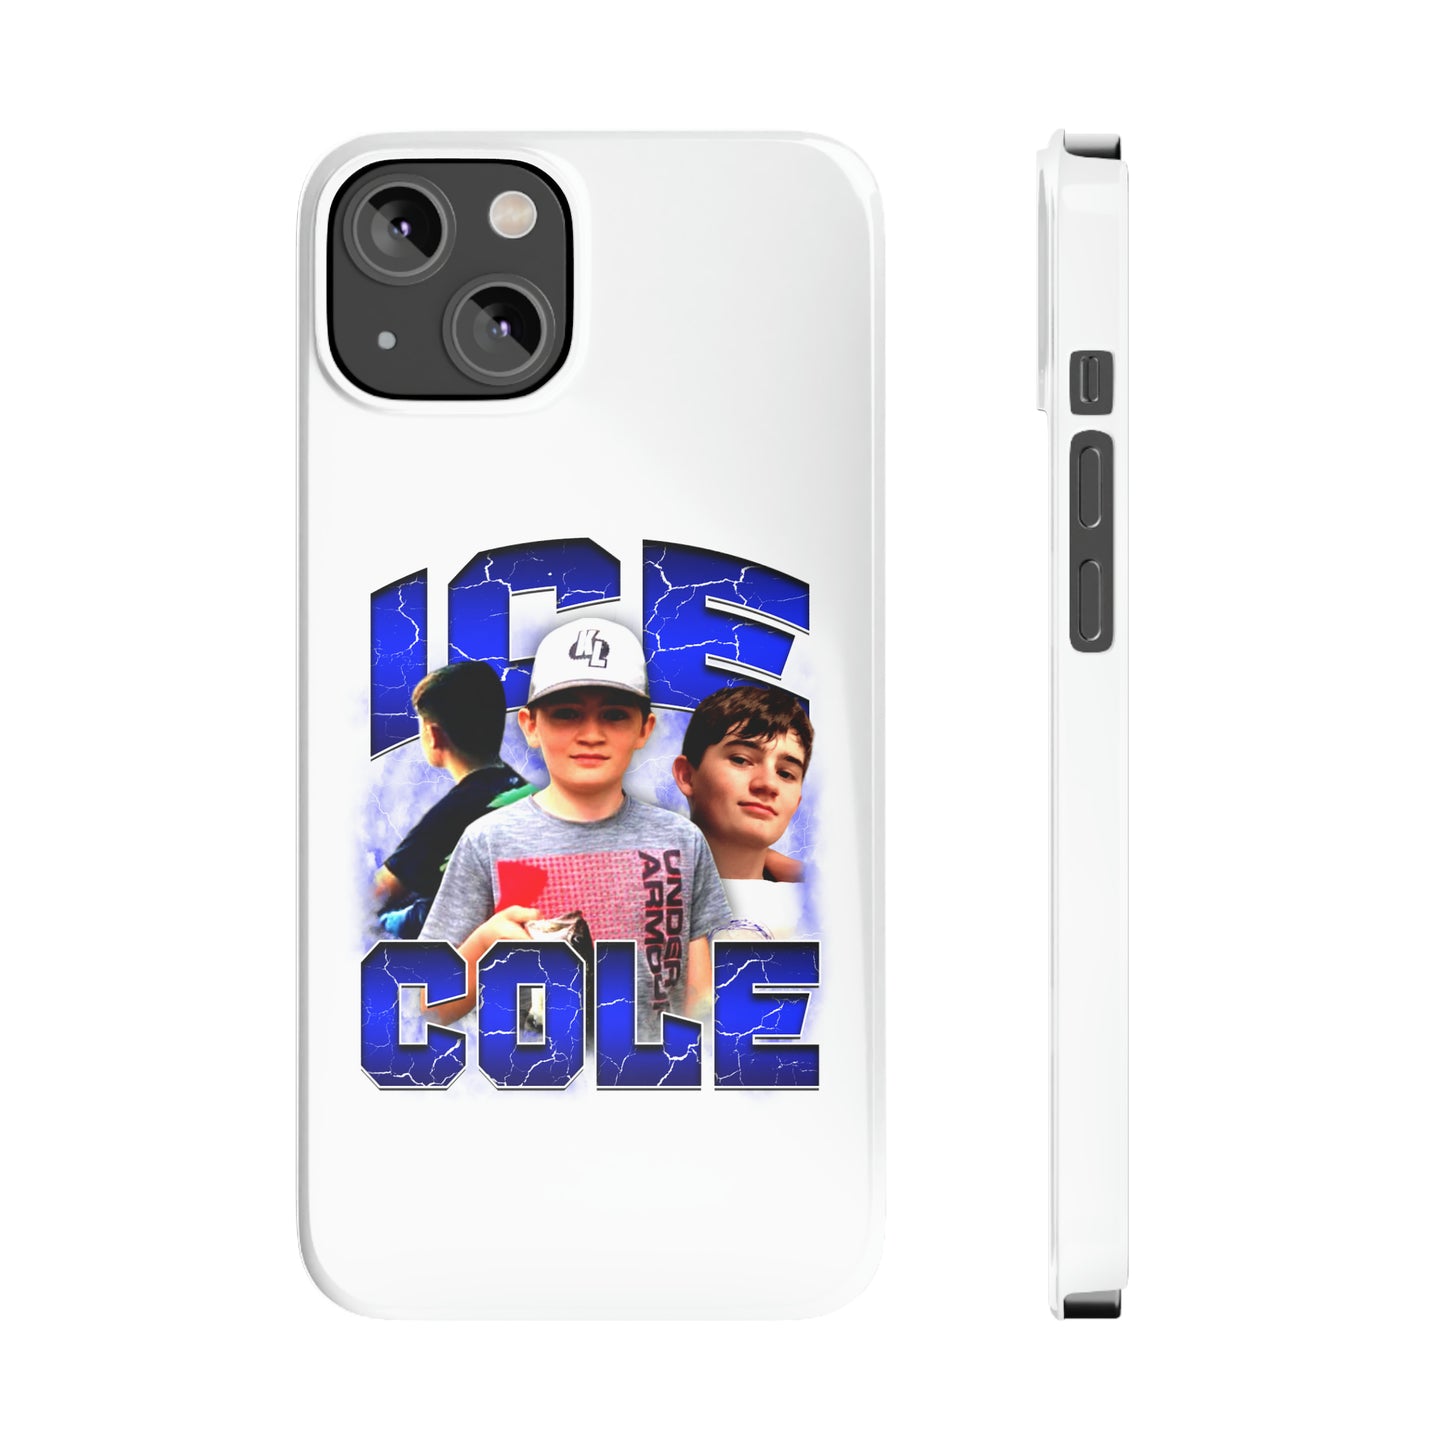 Ice Cole Slim Phone Cases